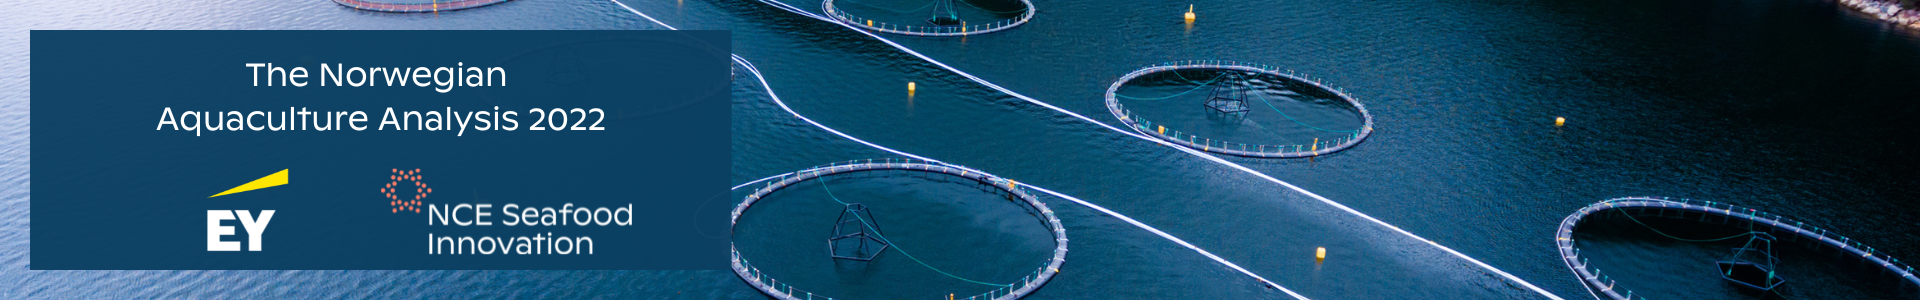 Header image for The Norwegian Aquaculture Analysis 2022